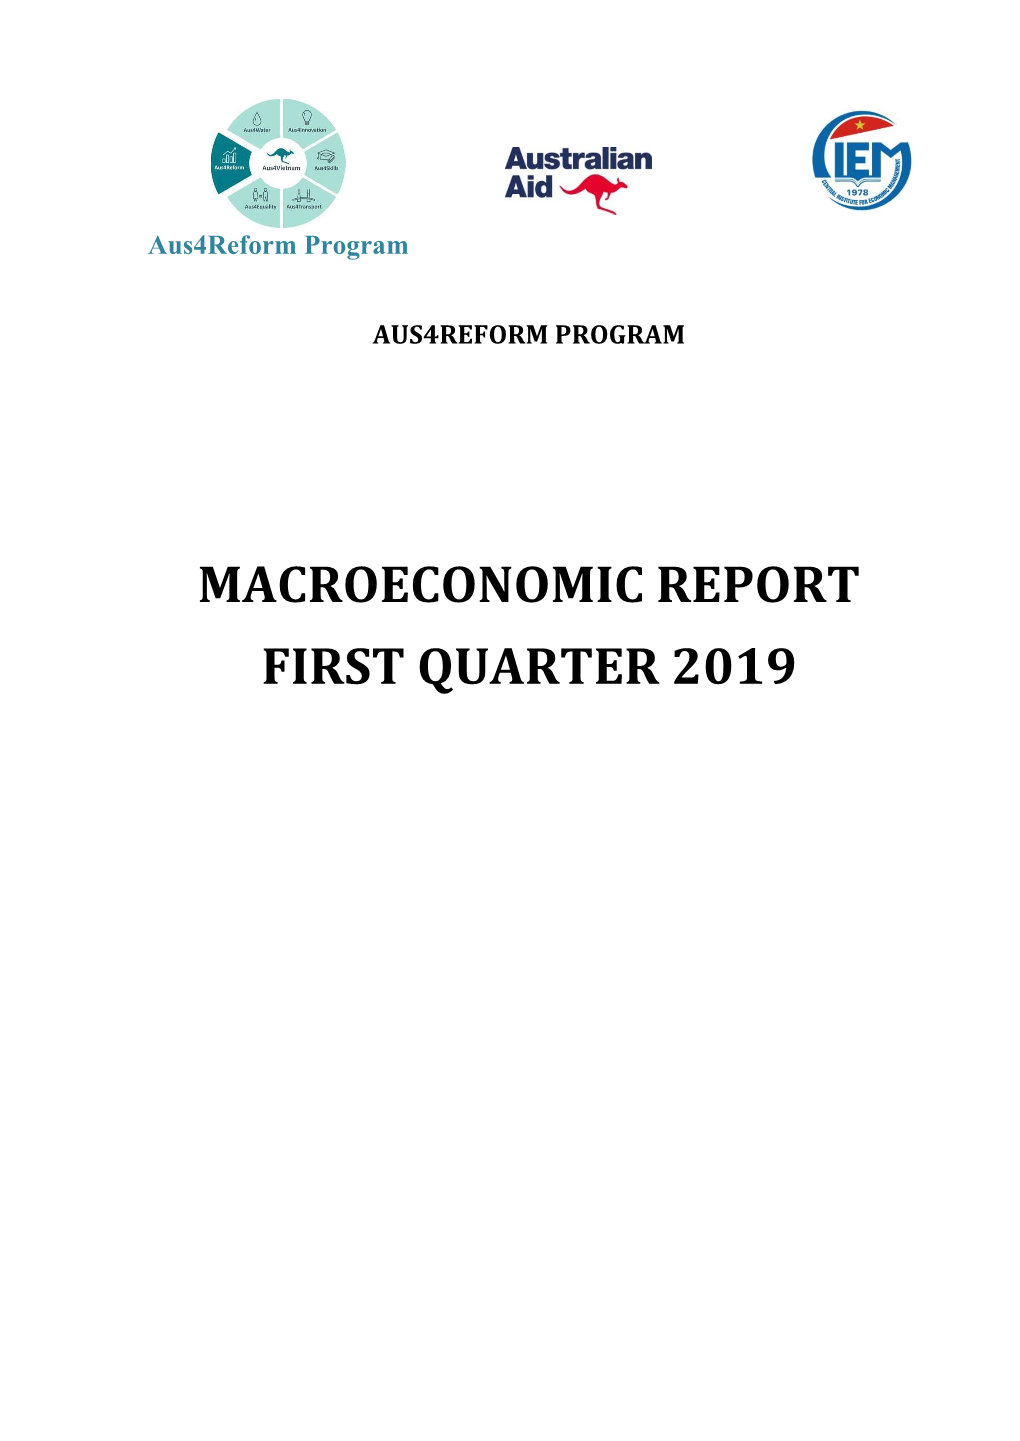 Macroeconomic Report First Quarter 2019